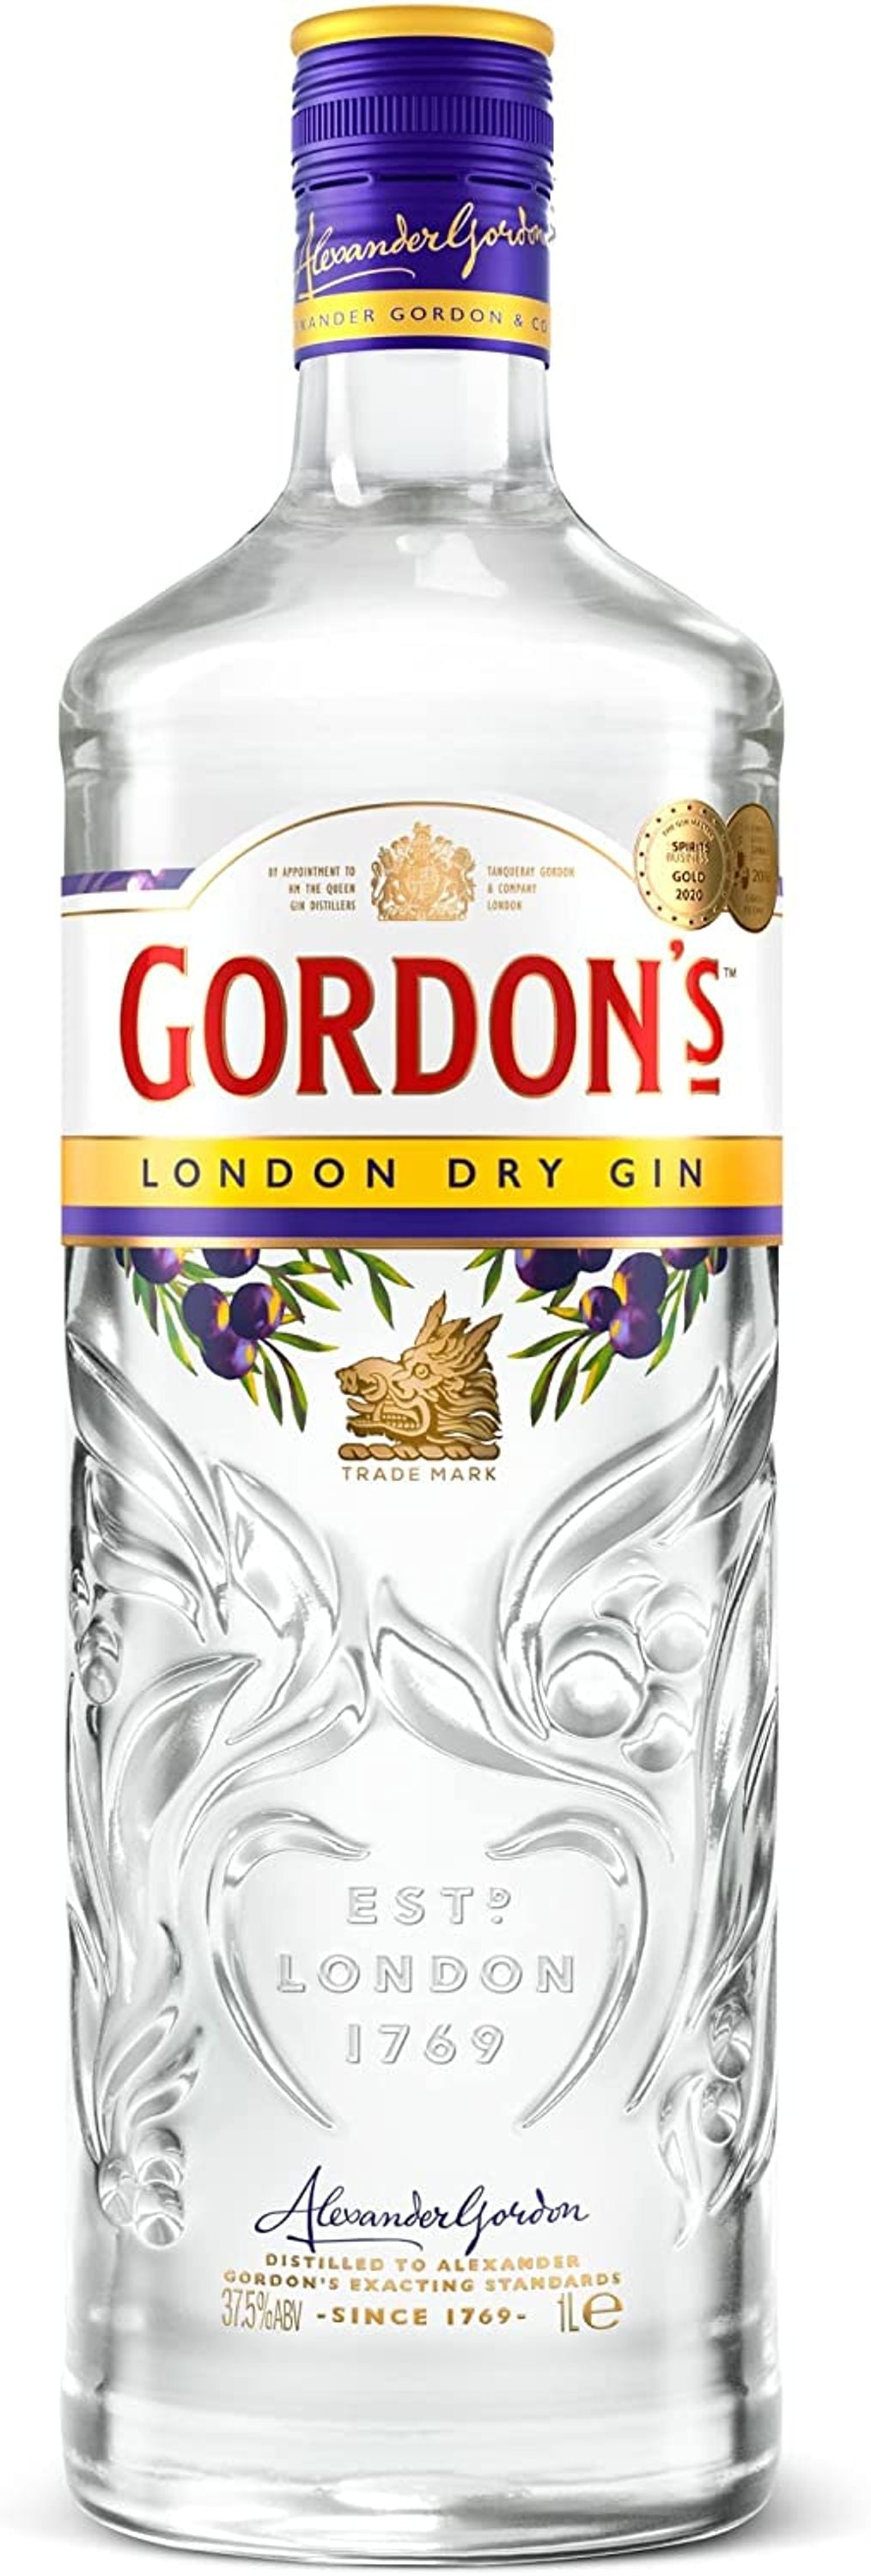 Gordon's London Dry Gin 0,7l, alk. 37,5 tilavuusprosenttia, Gin England